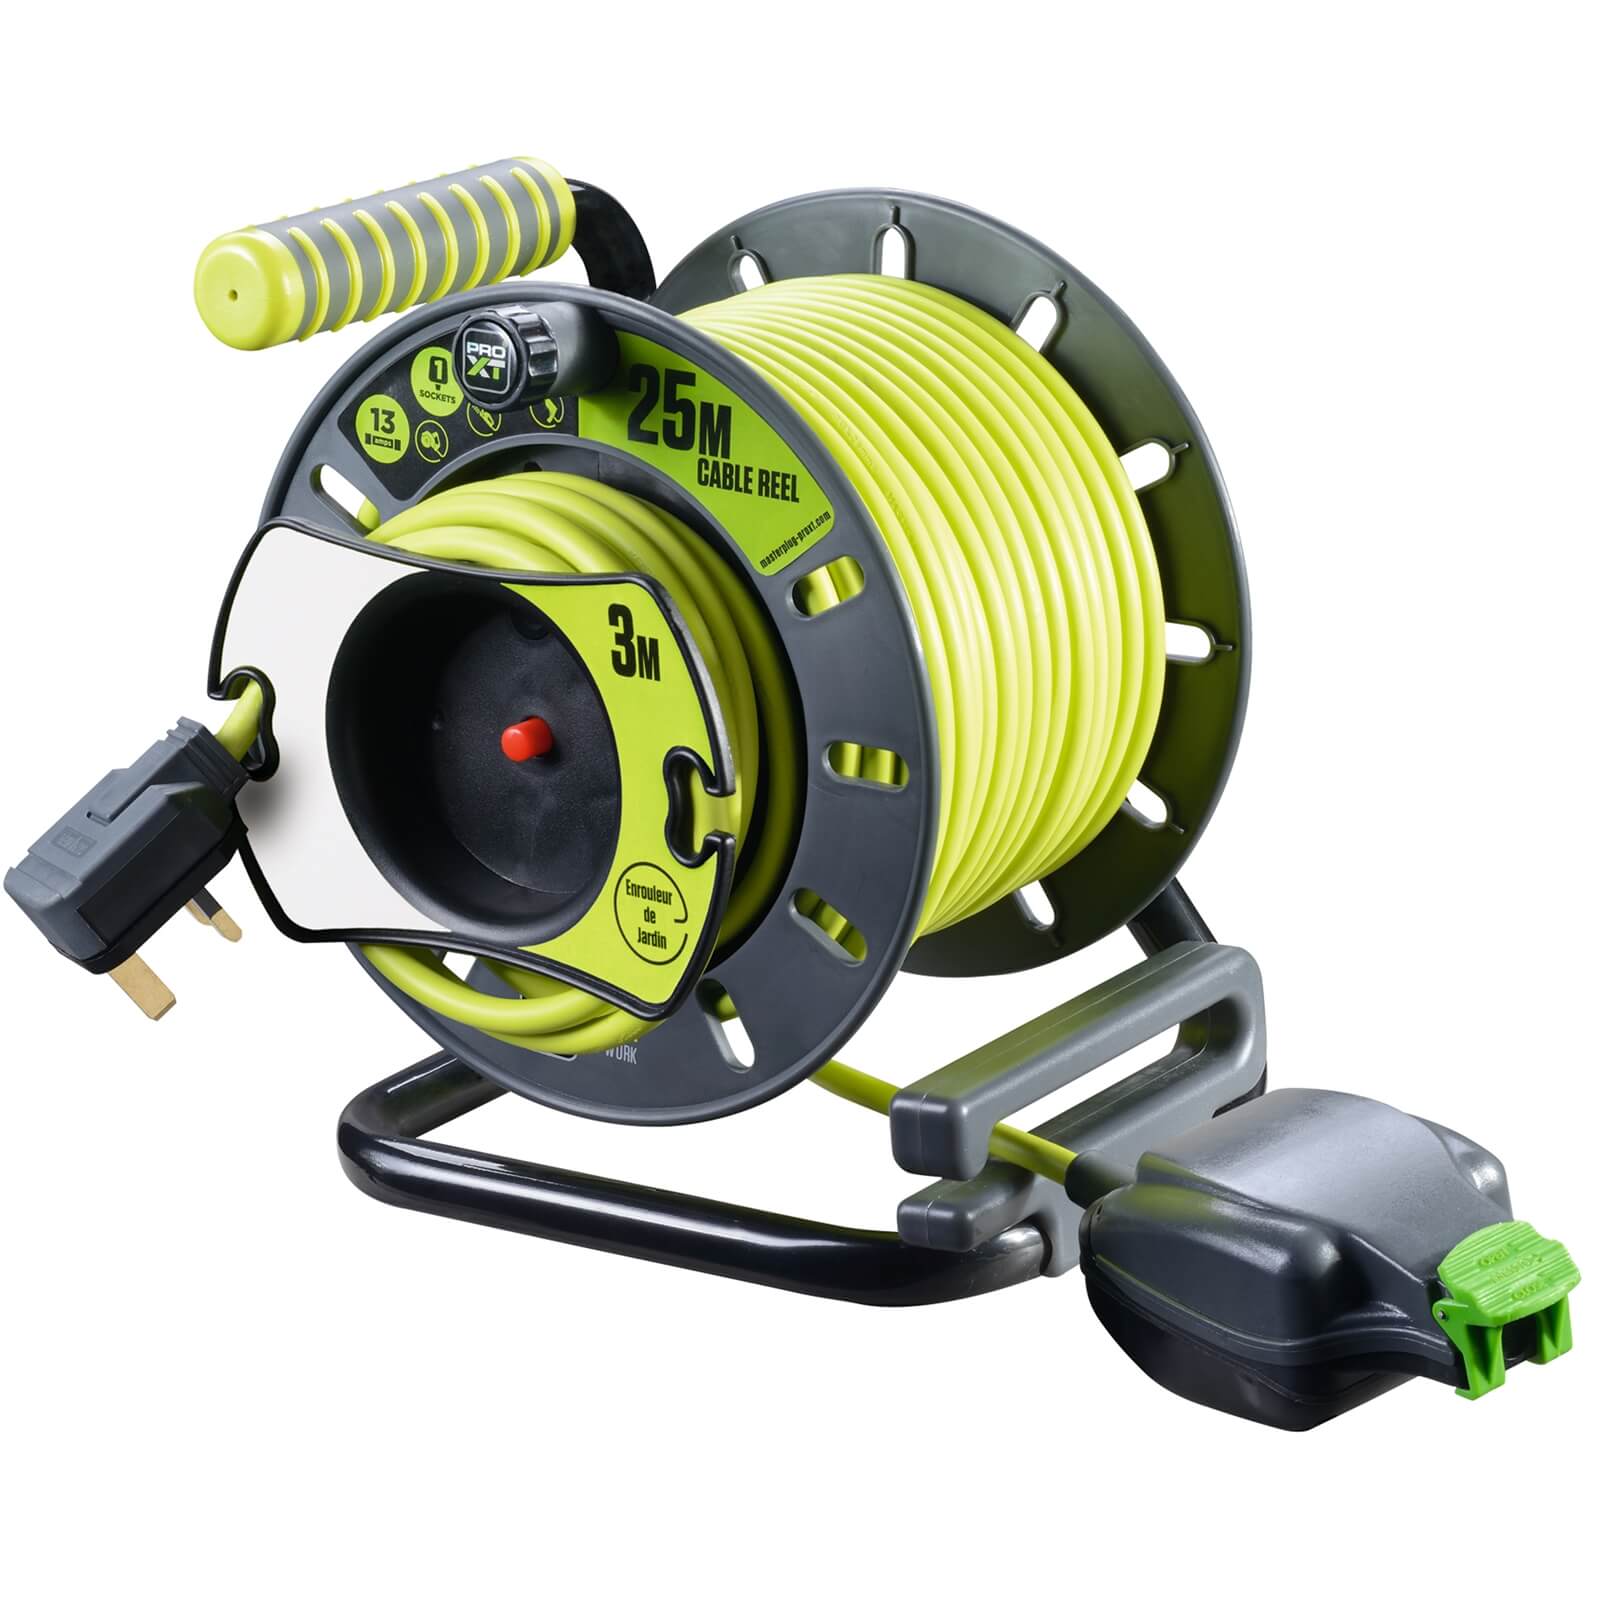 Masterplug Pro XT 1 Socket Cable Reel 25m & Reverse Reel 3m IP54 Rated Green/Grey